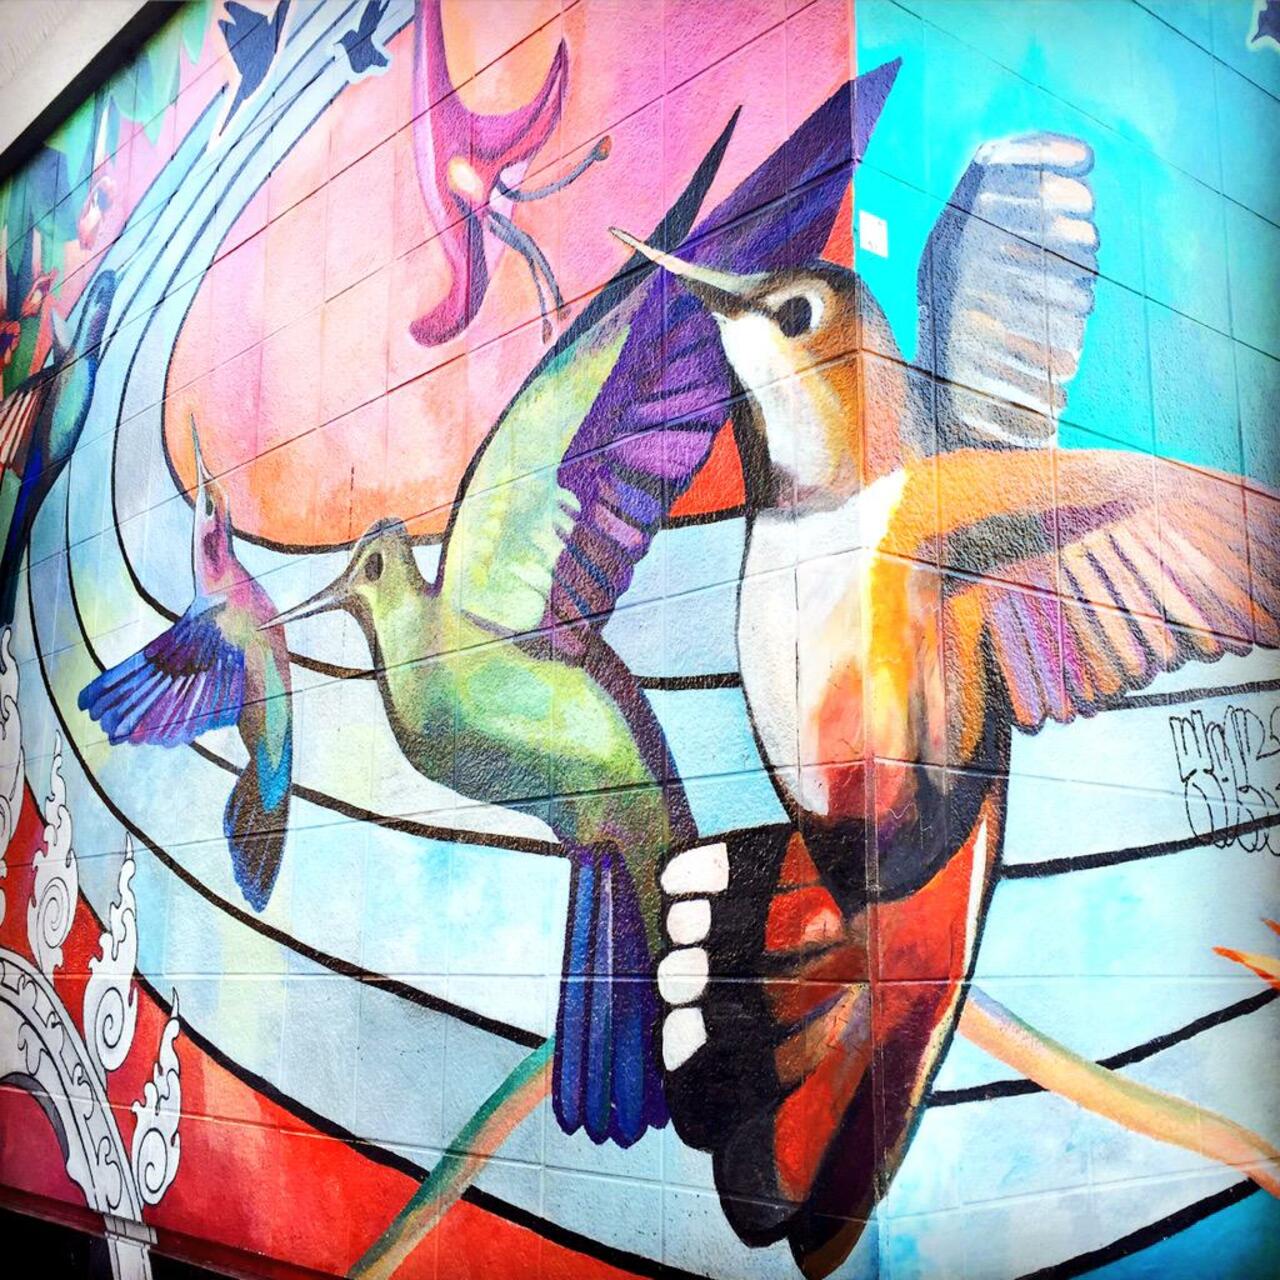 #21 of the series #EyeofCC #IspySF #sanfrancisco #live #art #streetart #graffiti #color #bird #PhotoJournalist http://t.co/BXqSJDP1Bp